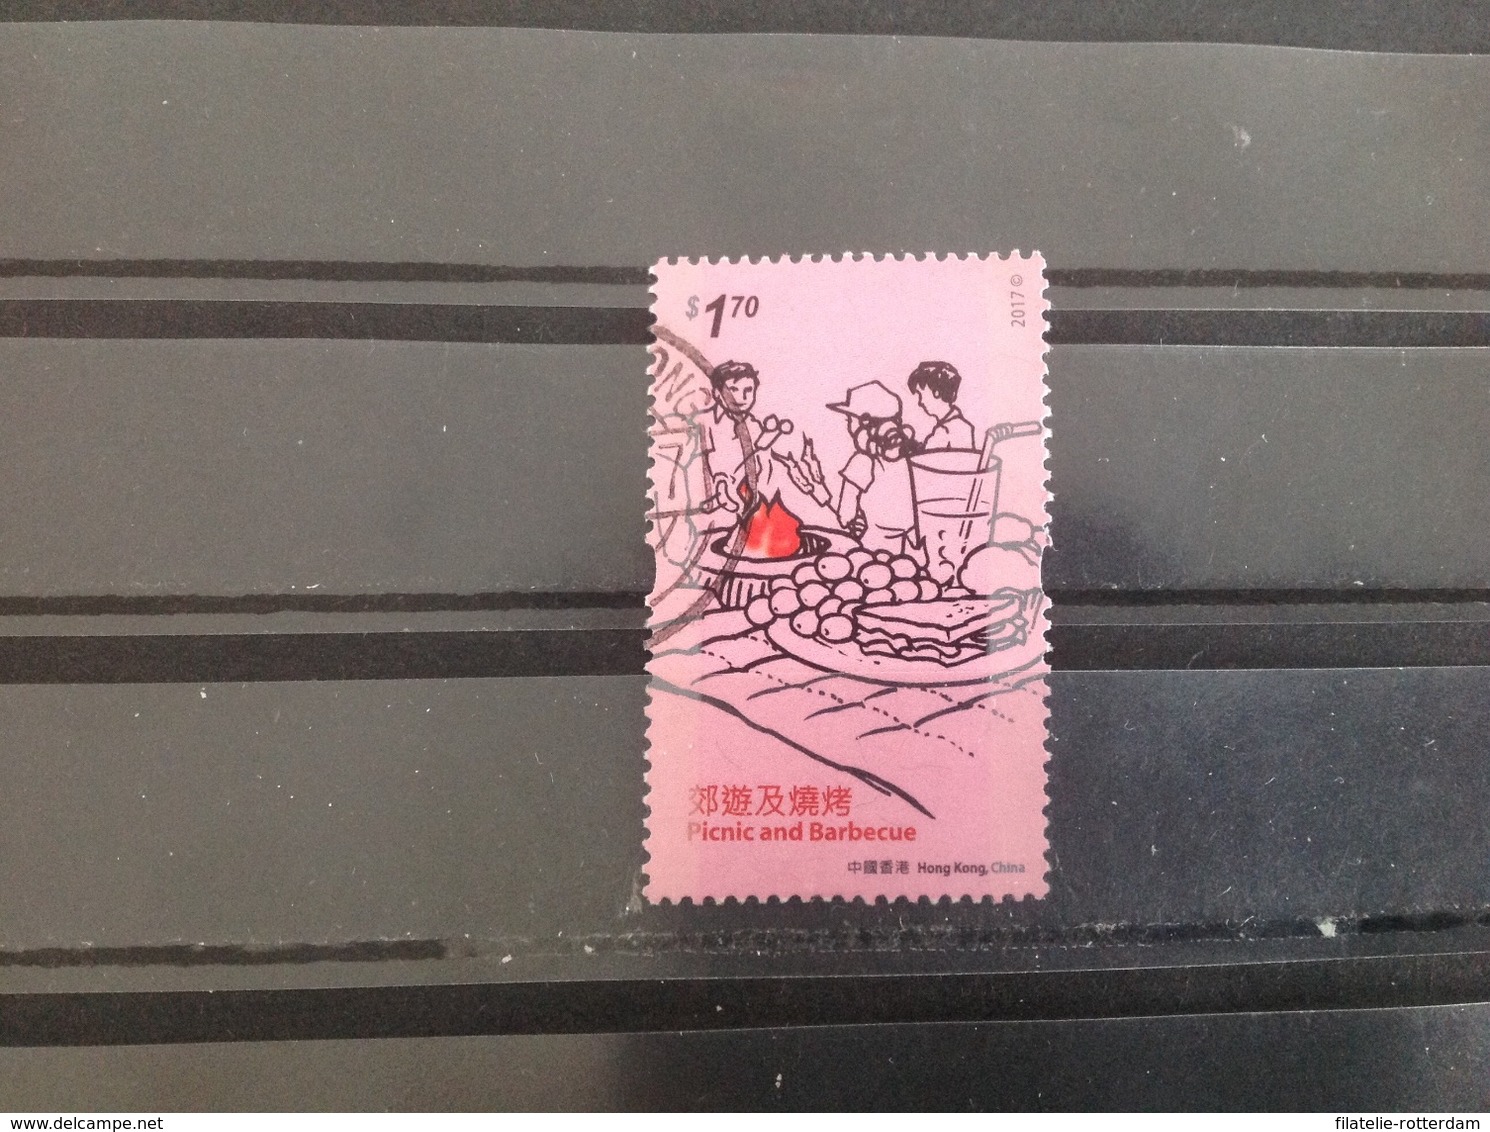 Hong Kong - Picnic & Barbecue (1.70) 2017 - Used Stamps